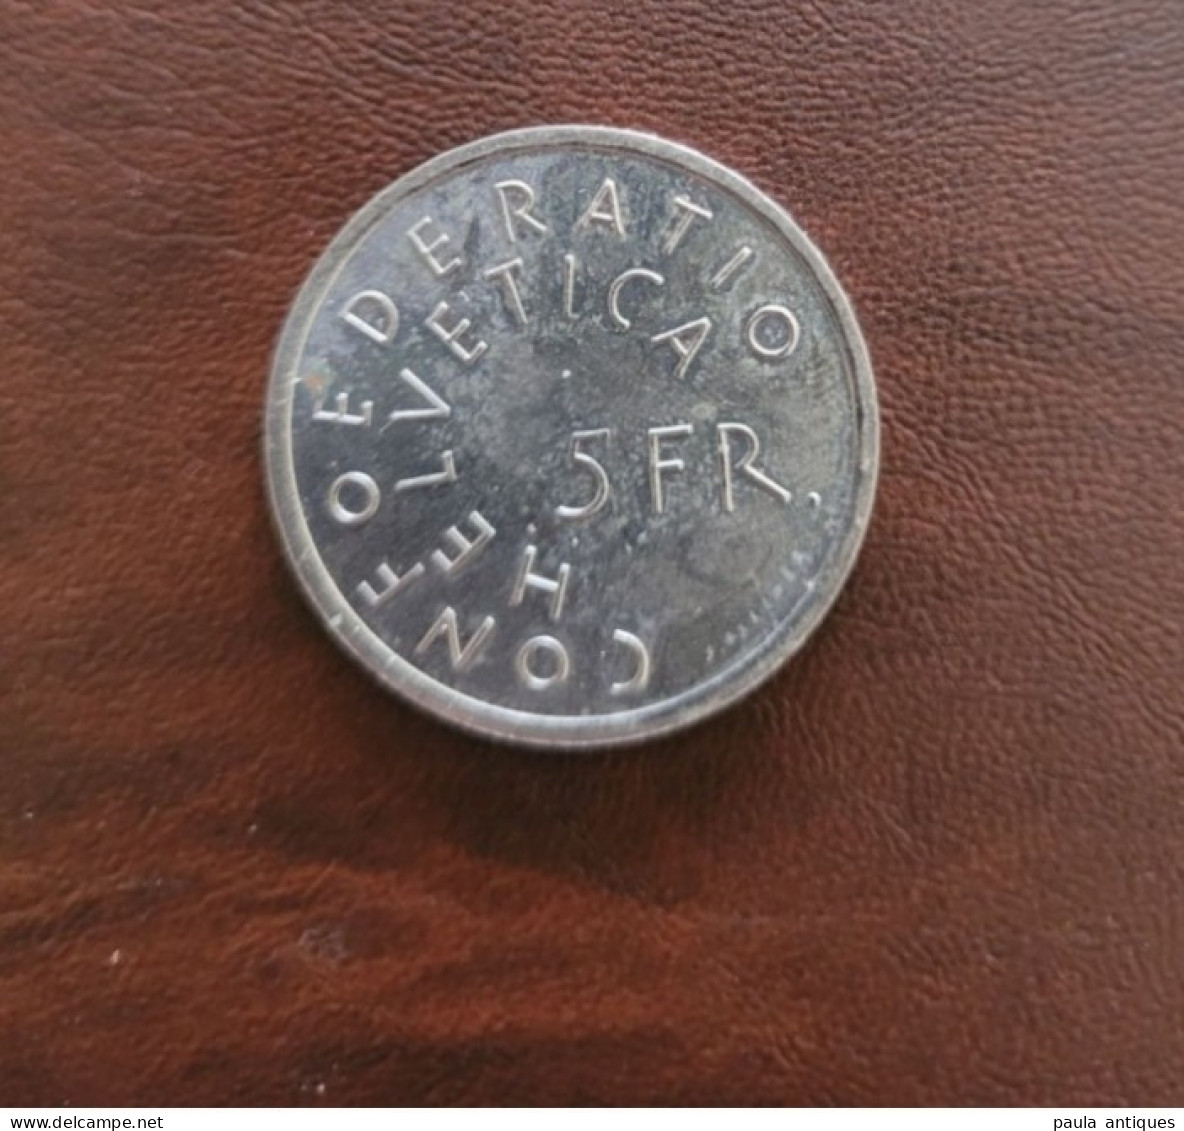 5 Francs 1975 Switzerland - Commemorative